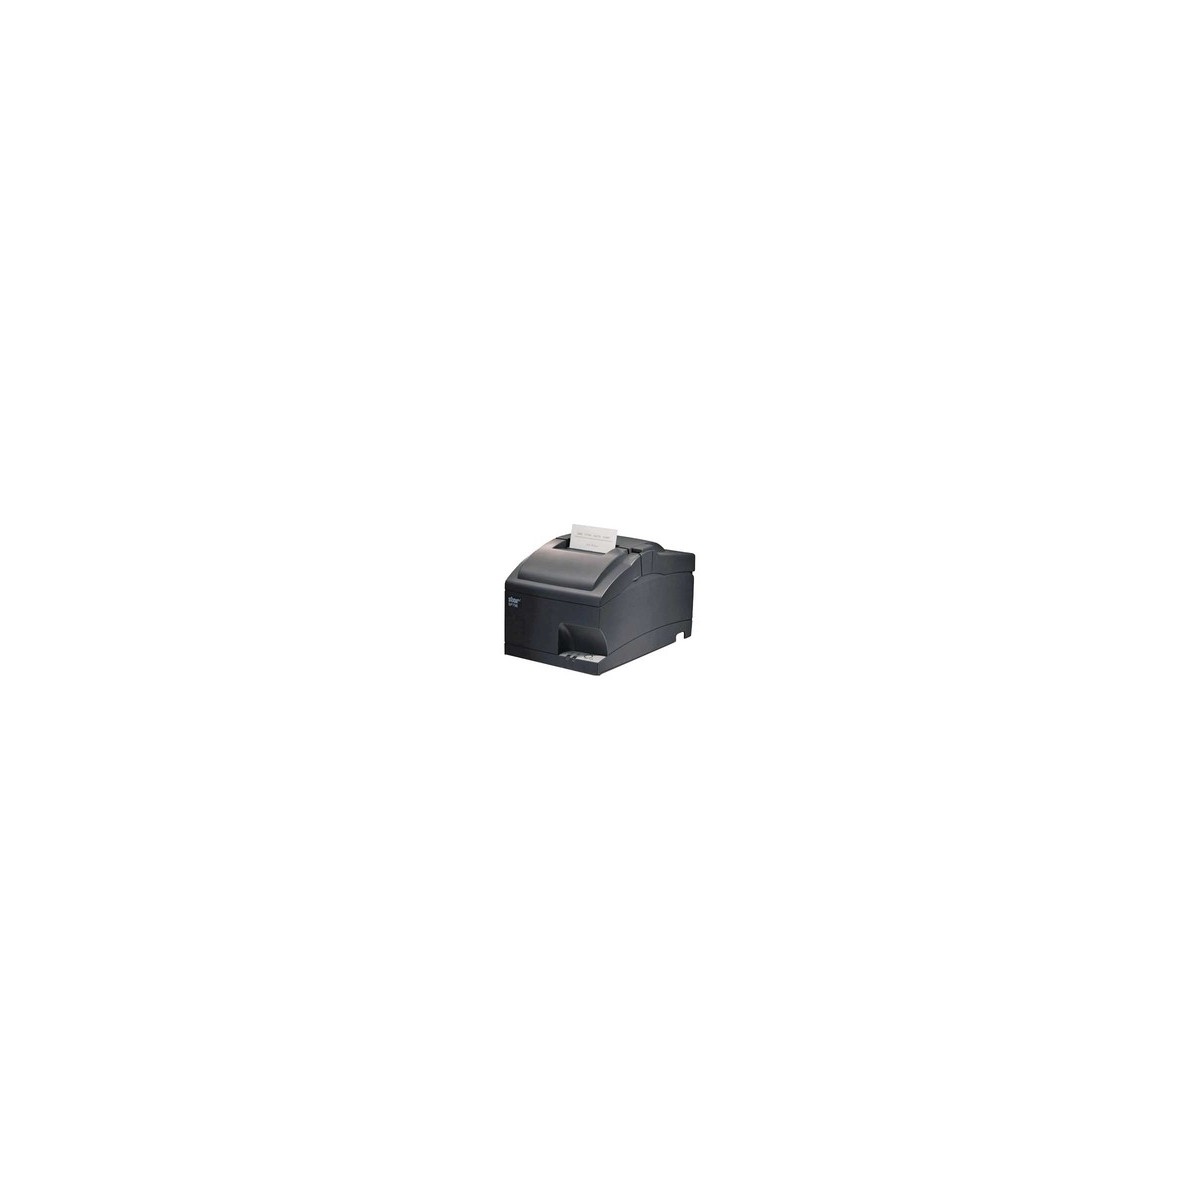 Star Micronics SP700 - Dot matrix - POS printer - 8.9 lps - 76 mm - Wired - Parallel